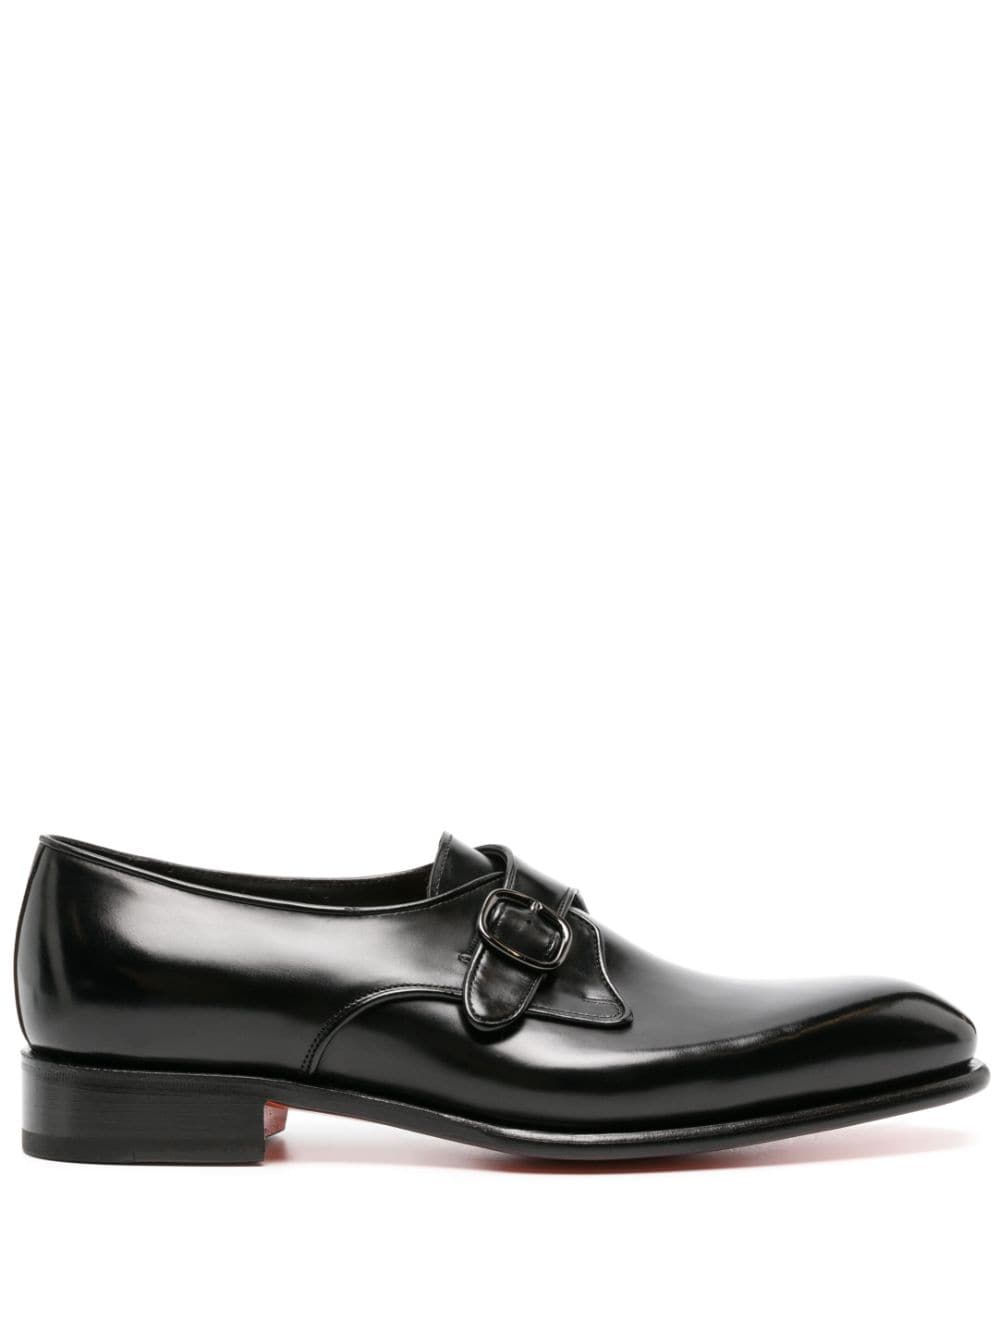 Santoni Carter One leather Oxford shoes - Black von Santoni